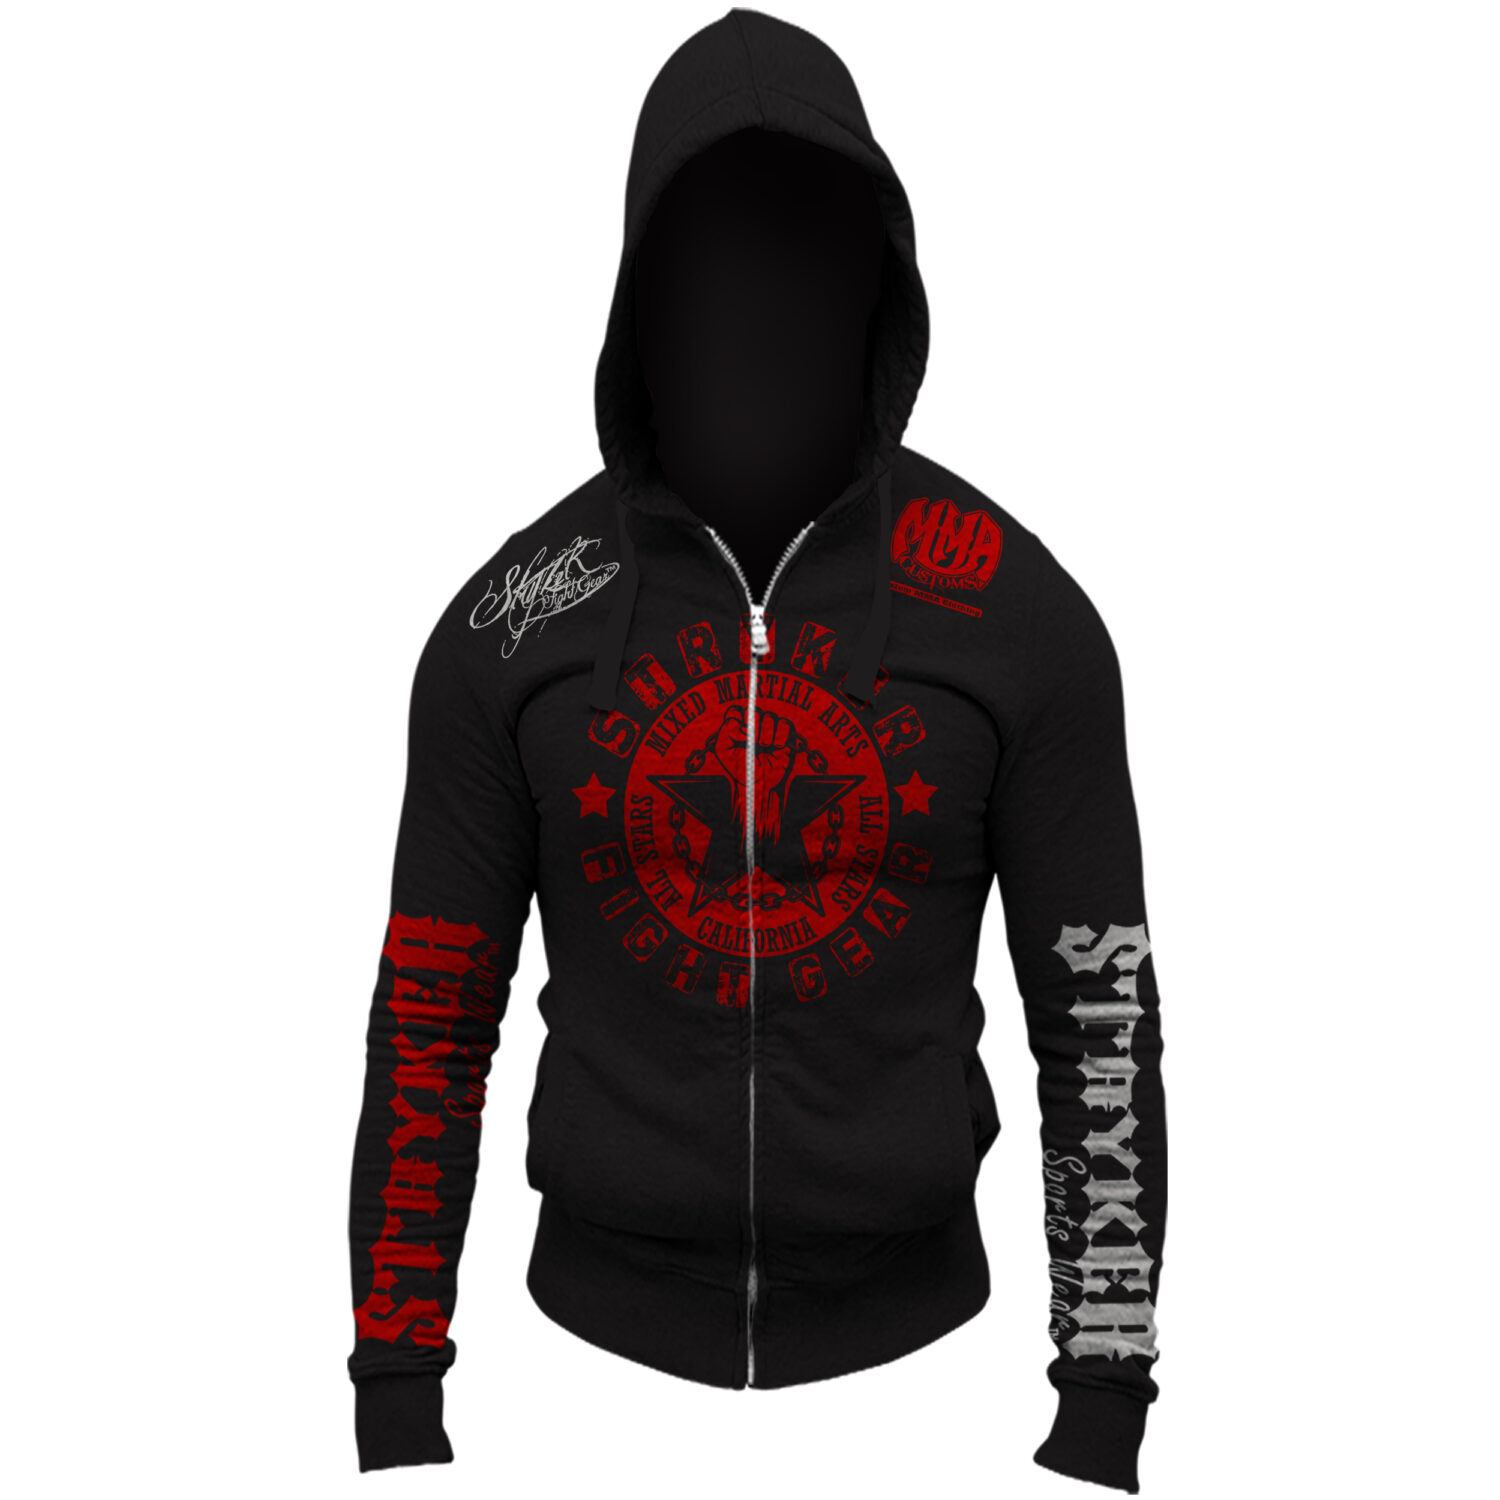 Stryker Fight Gear MMA California All Star Adult Full Zip Up Hoody Black Red White Logos